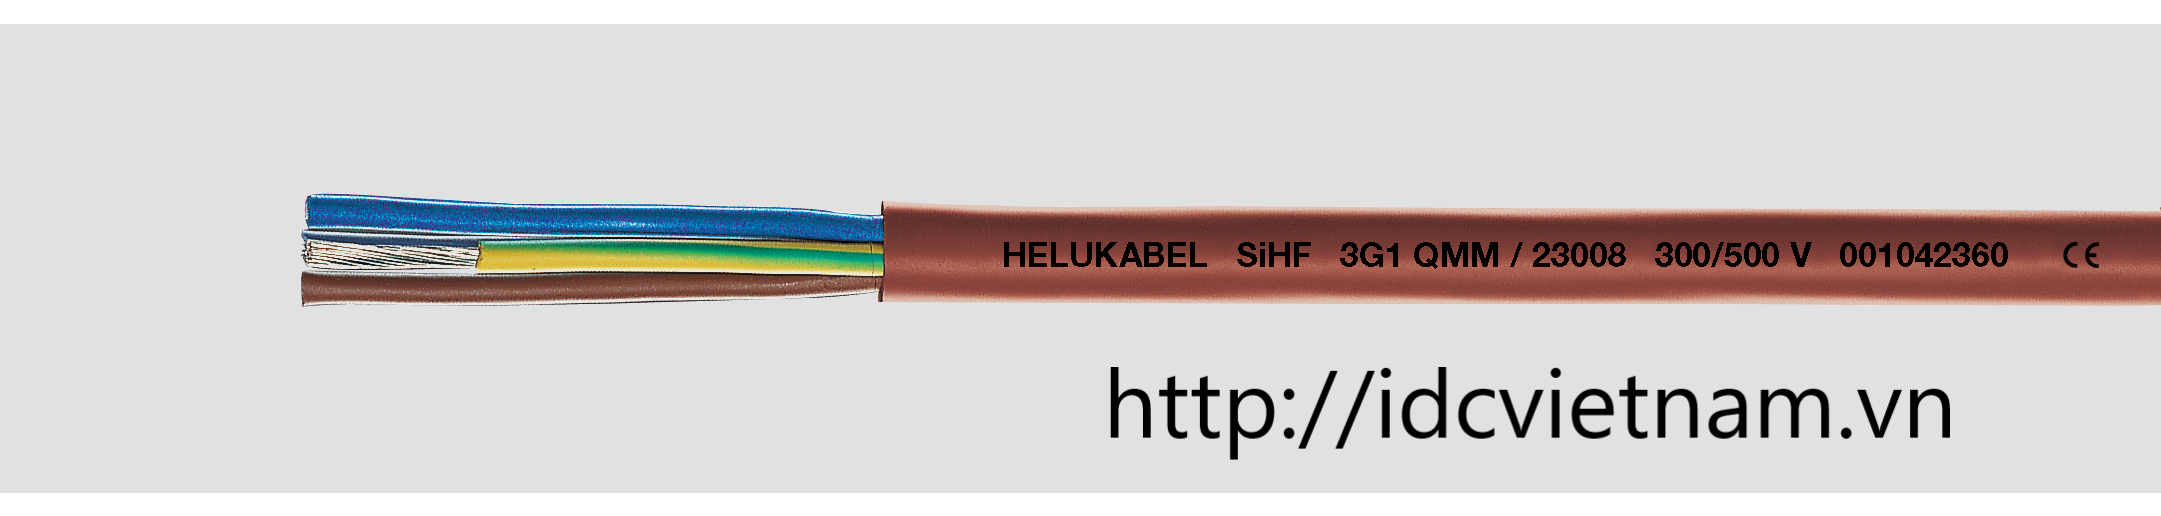 Helukabel SiHF 4G1mm2 R-BN (23009)